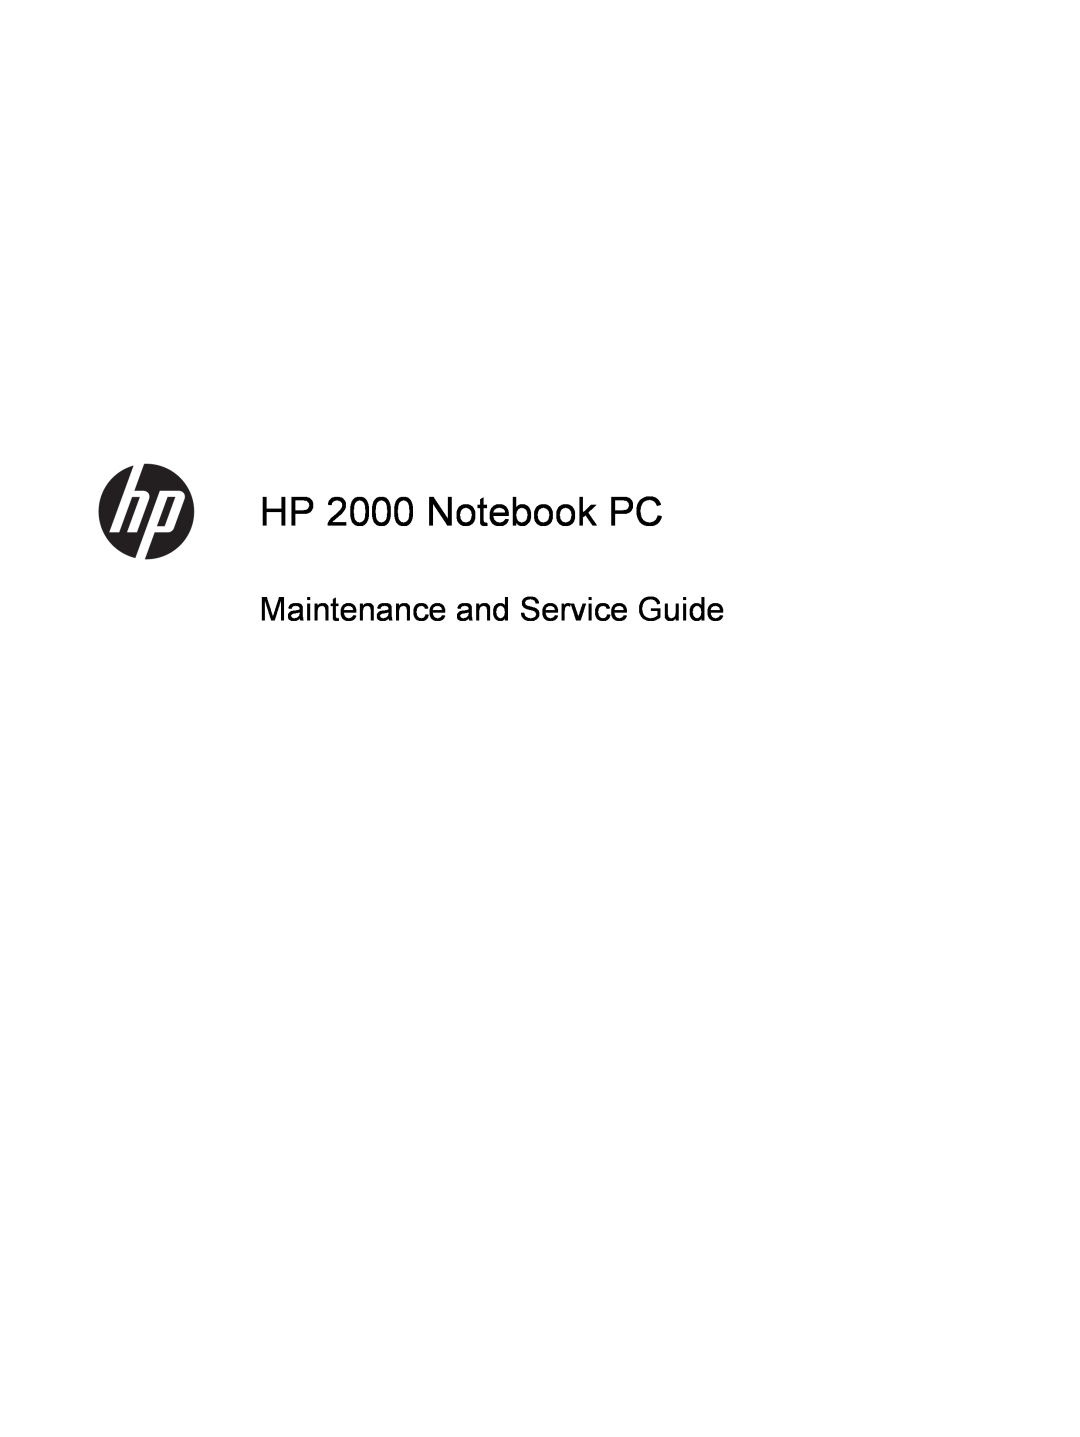 HP D1E80UA manual HP 2000 Notebook PC, Maintenance and Service Guide 